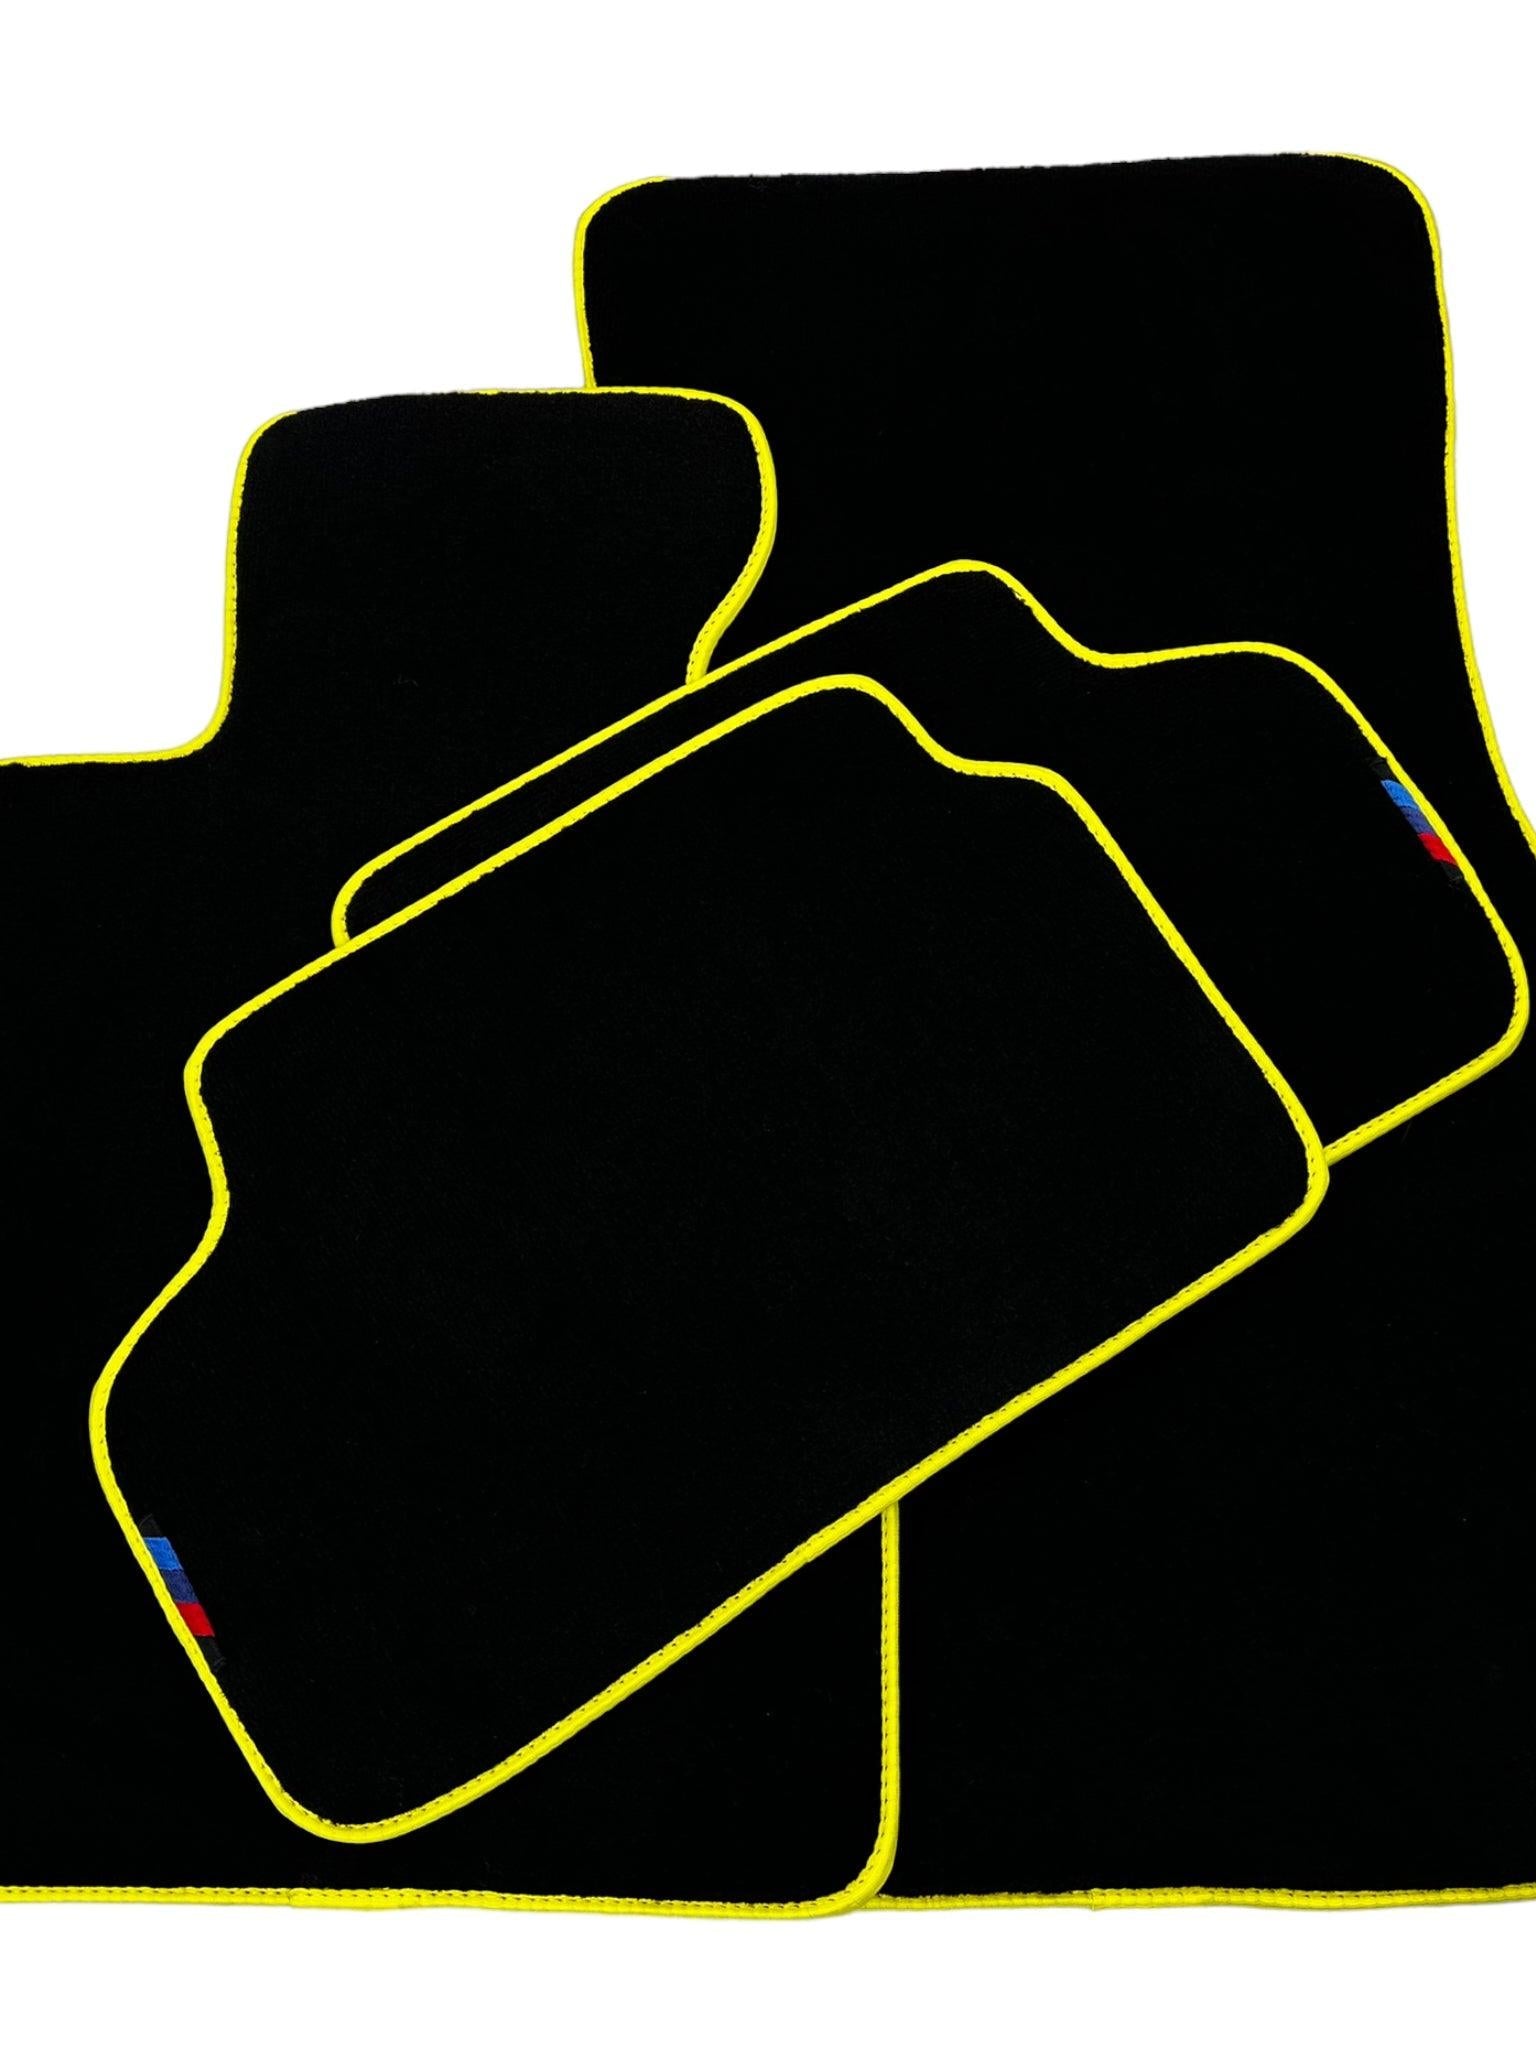 Black Floor Floor Mats For BMW 1 Series F40 | Fighter Jet Edition Autowin Brand | Yellow Trim